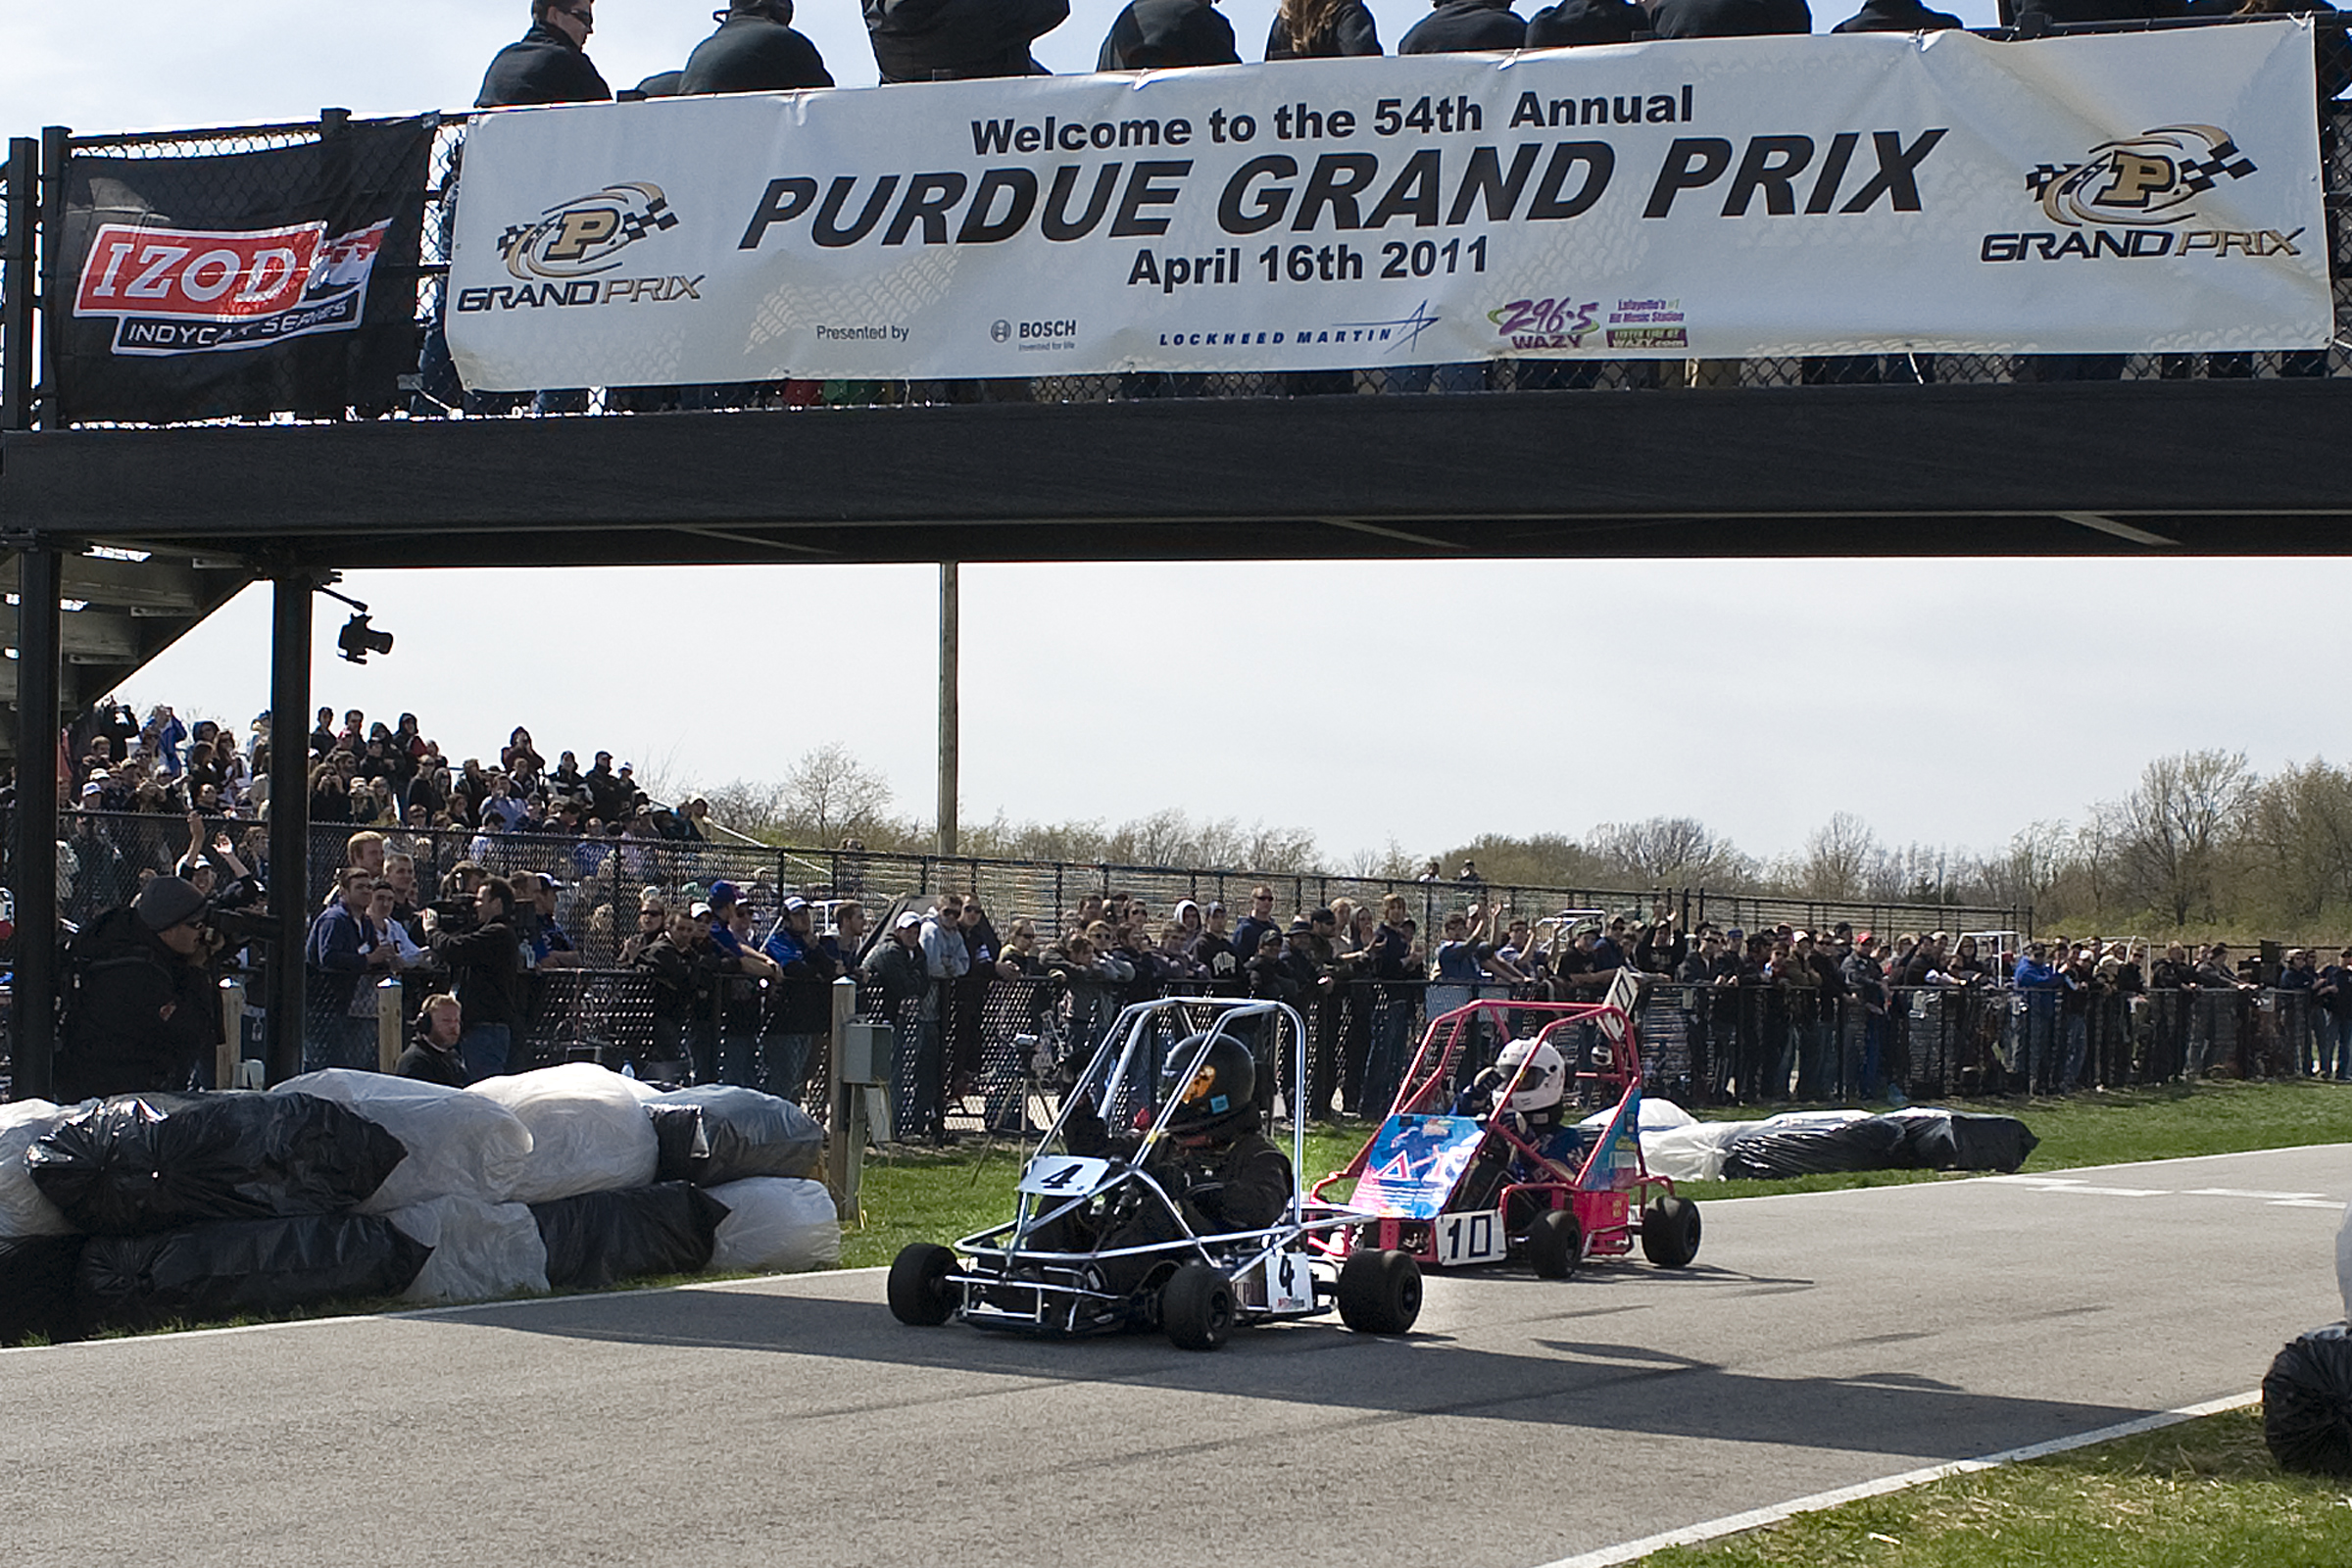 Purdue's 55th Grand Prix set for April 21